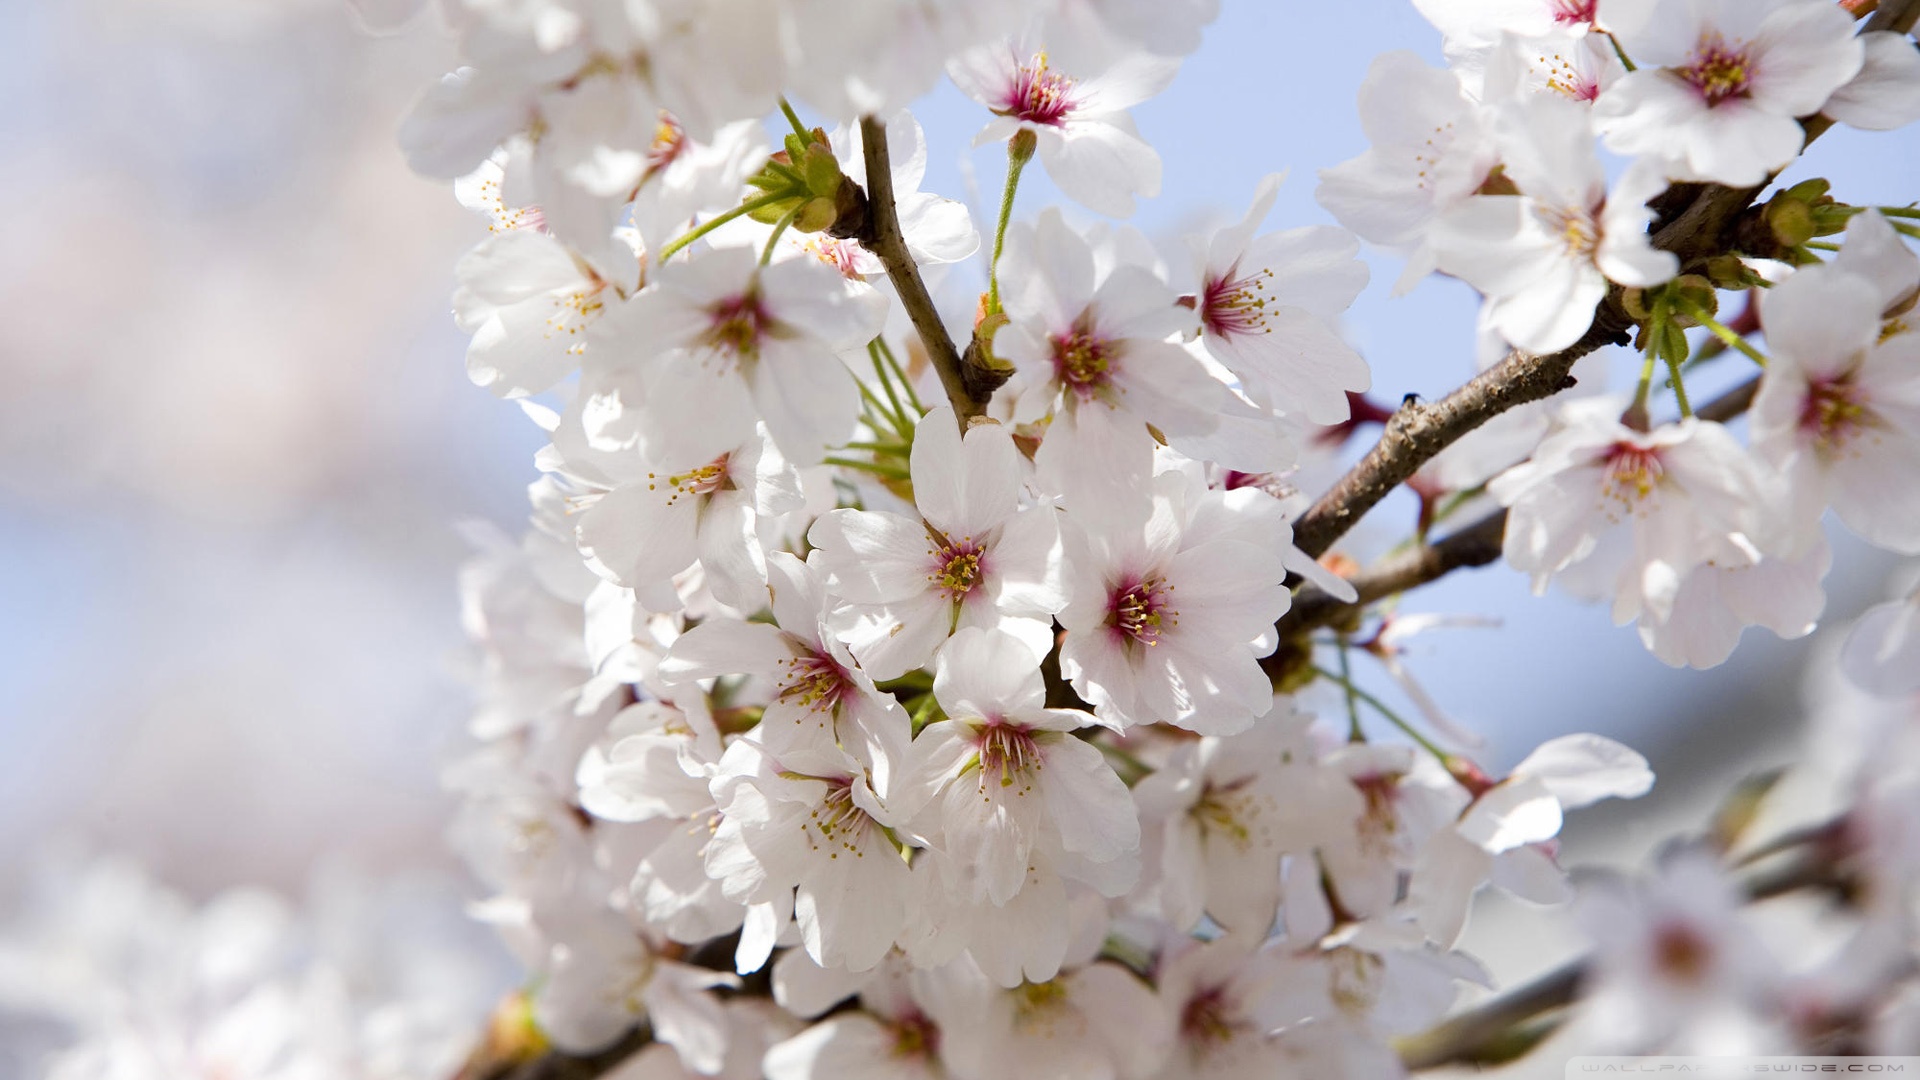 Japanese Cherry Blossoms Wallpaper